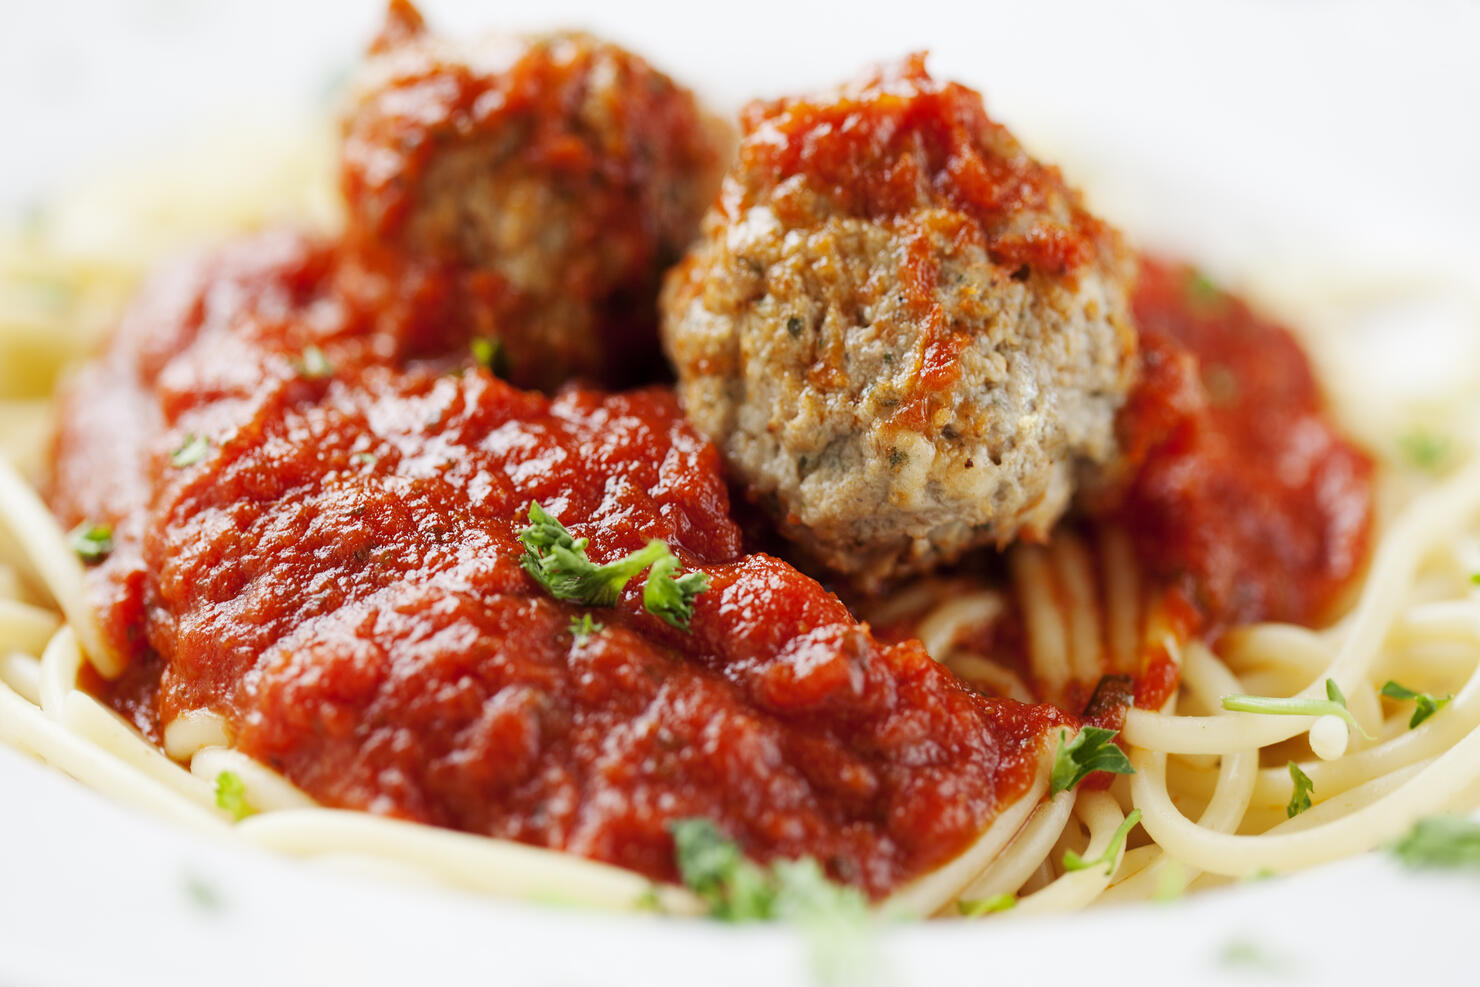 Italian food: plate of spaghetti with meatballs